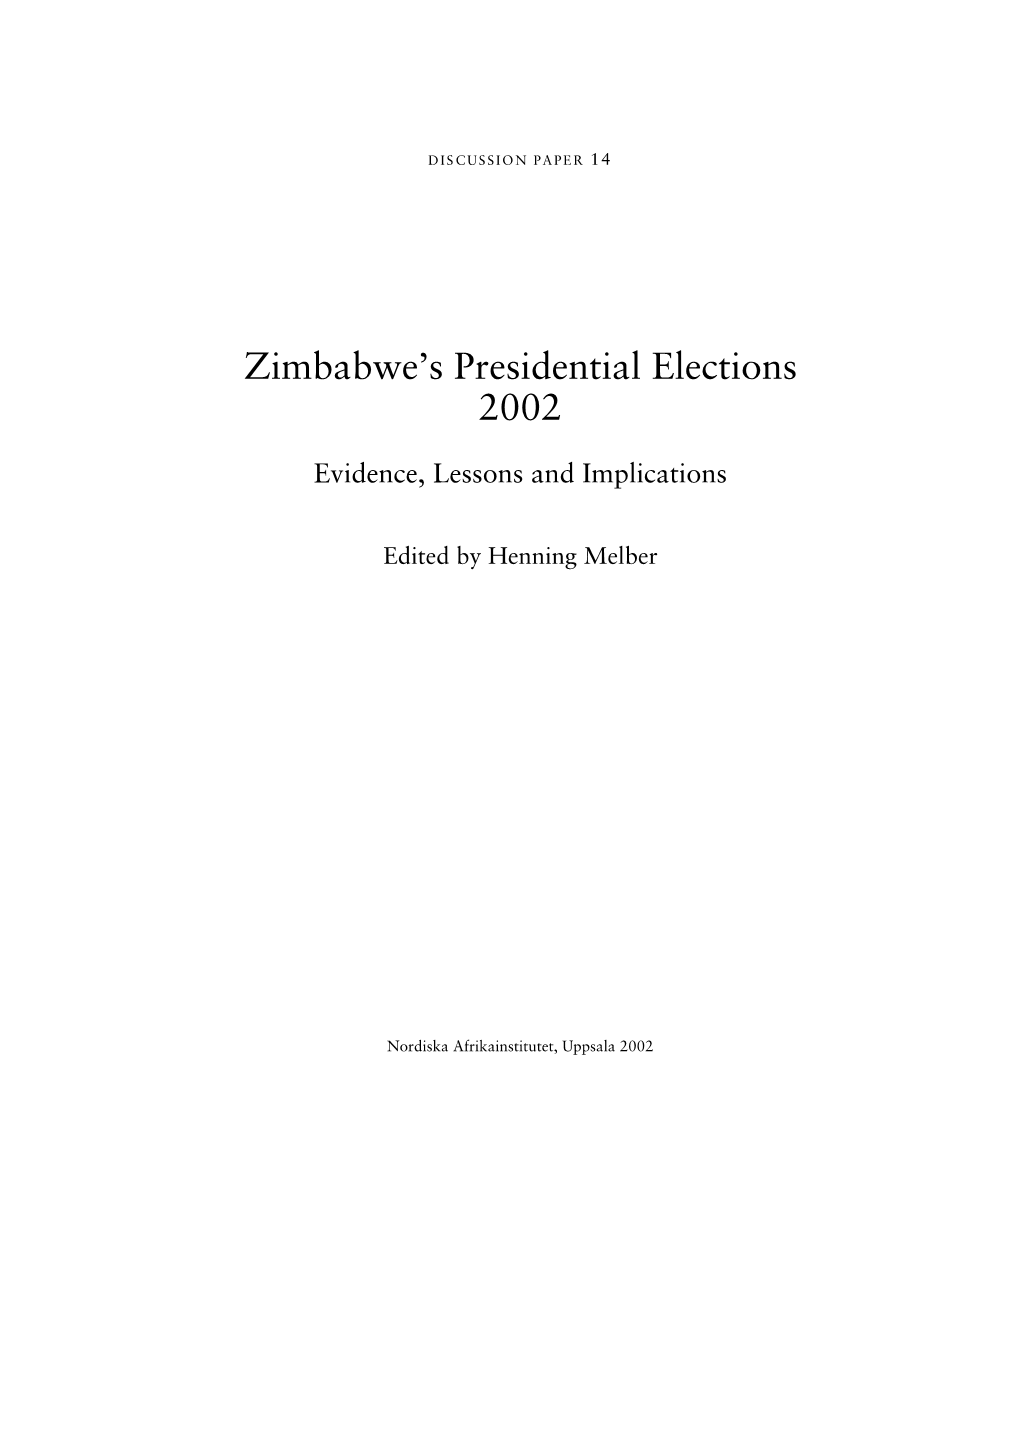 Zimbabwe's Presidential Elections 2002